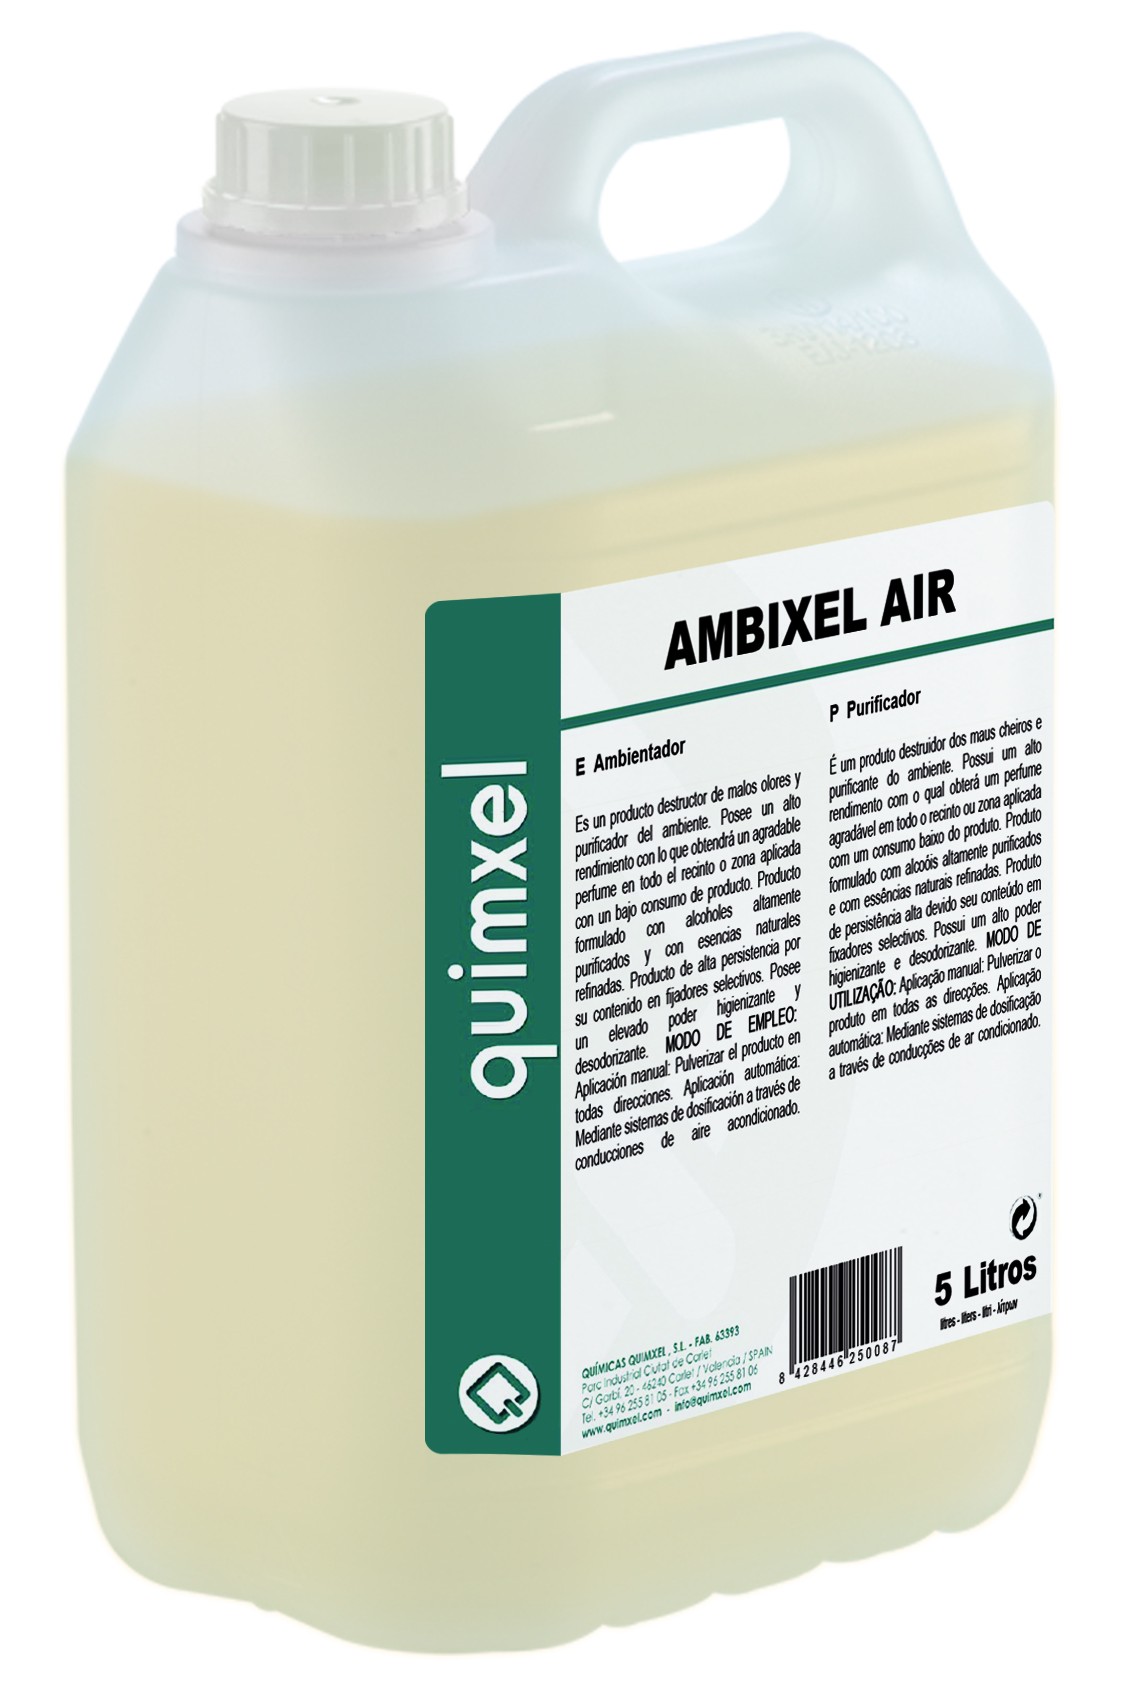 Ambientador Perfume, Ambixel Air 750ml, 5L y 20L